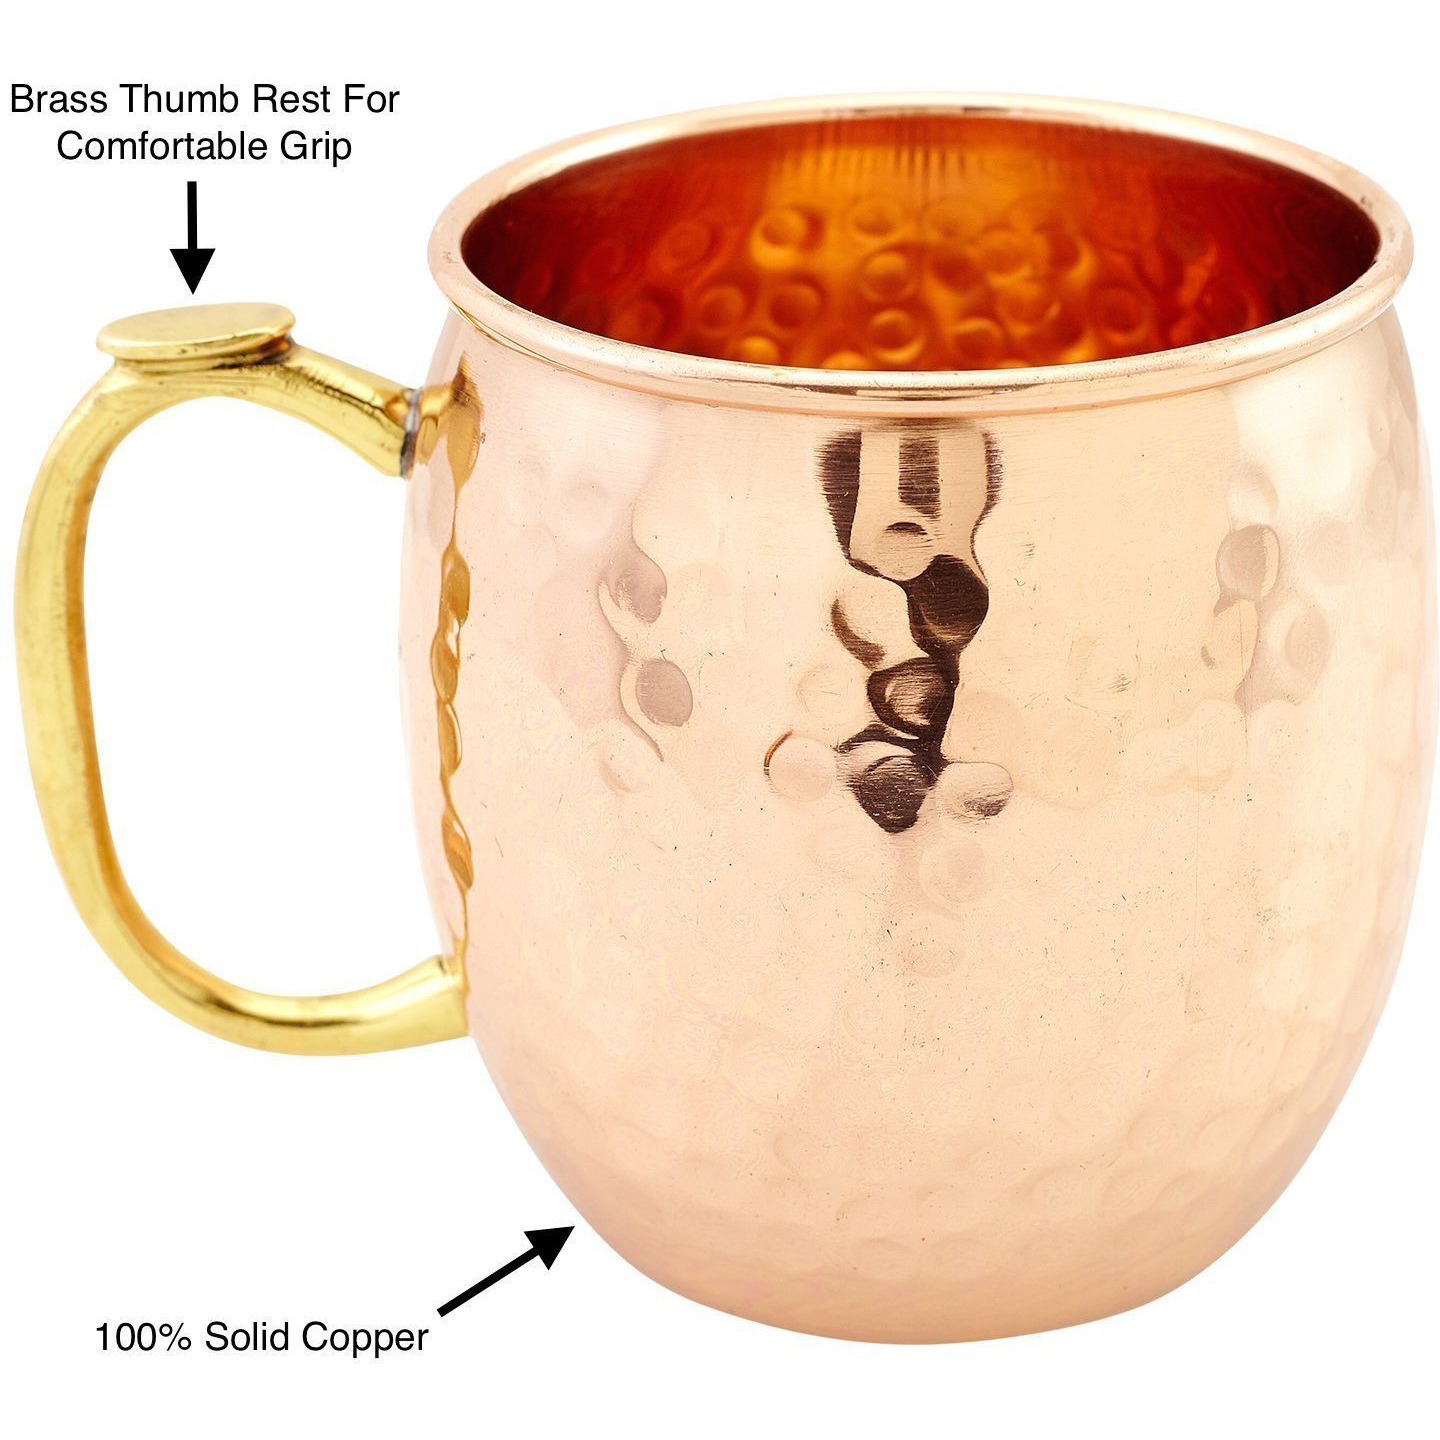 Set of 6 - Prisha India Craft B. Copper Mug for Moscow Mules 550 ML / 18 oz Pure Copper Mug Mule Cup, Moscow Mule Cocktail Cup, Copper Mugs, Cocktail Mugs